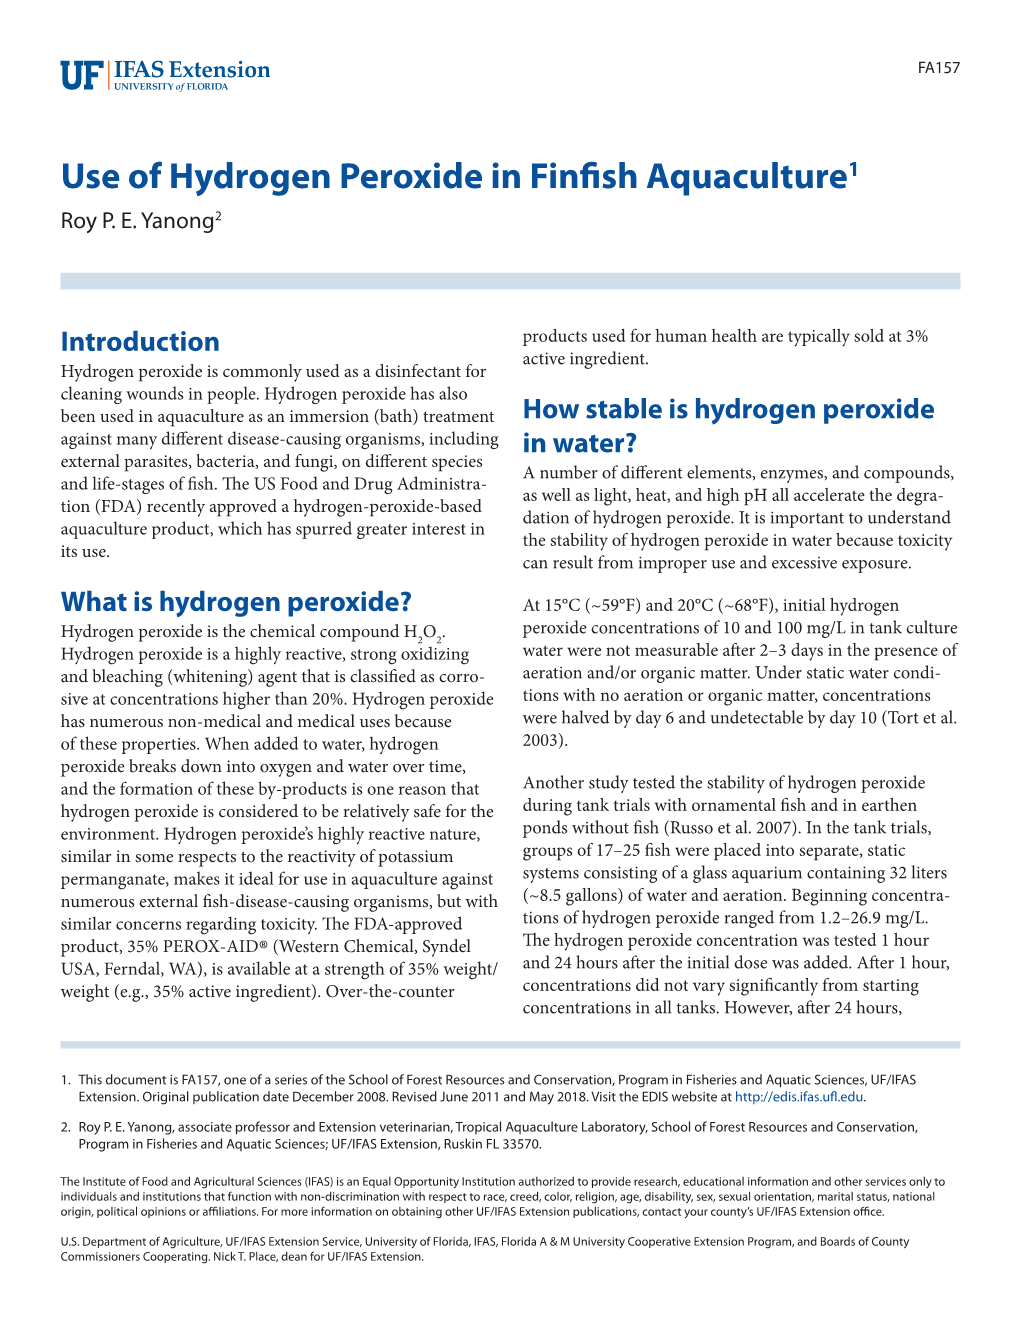 What Is Hydrogen Peroxide?